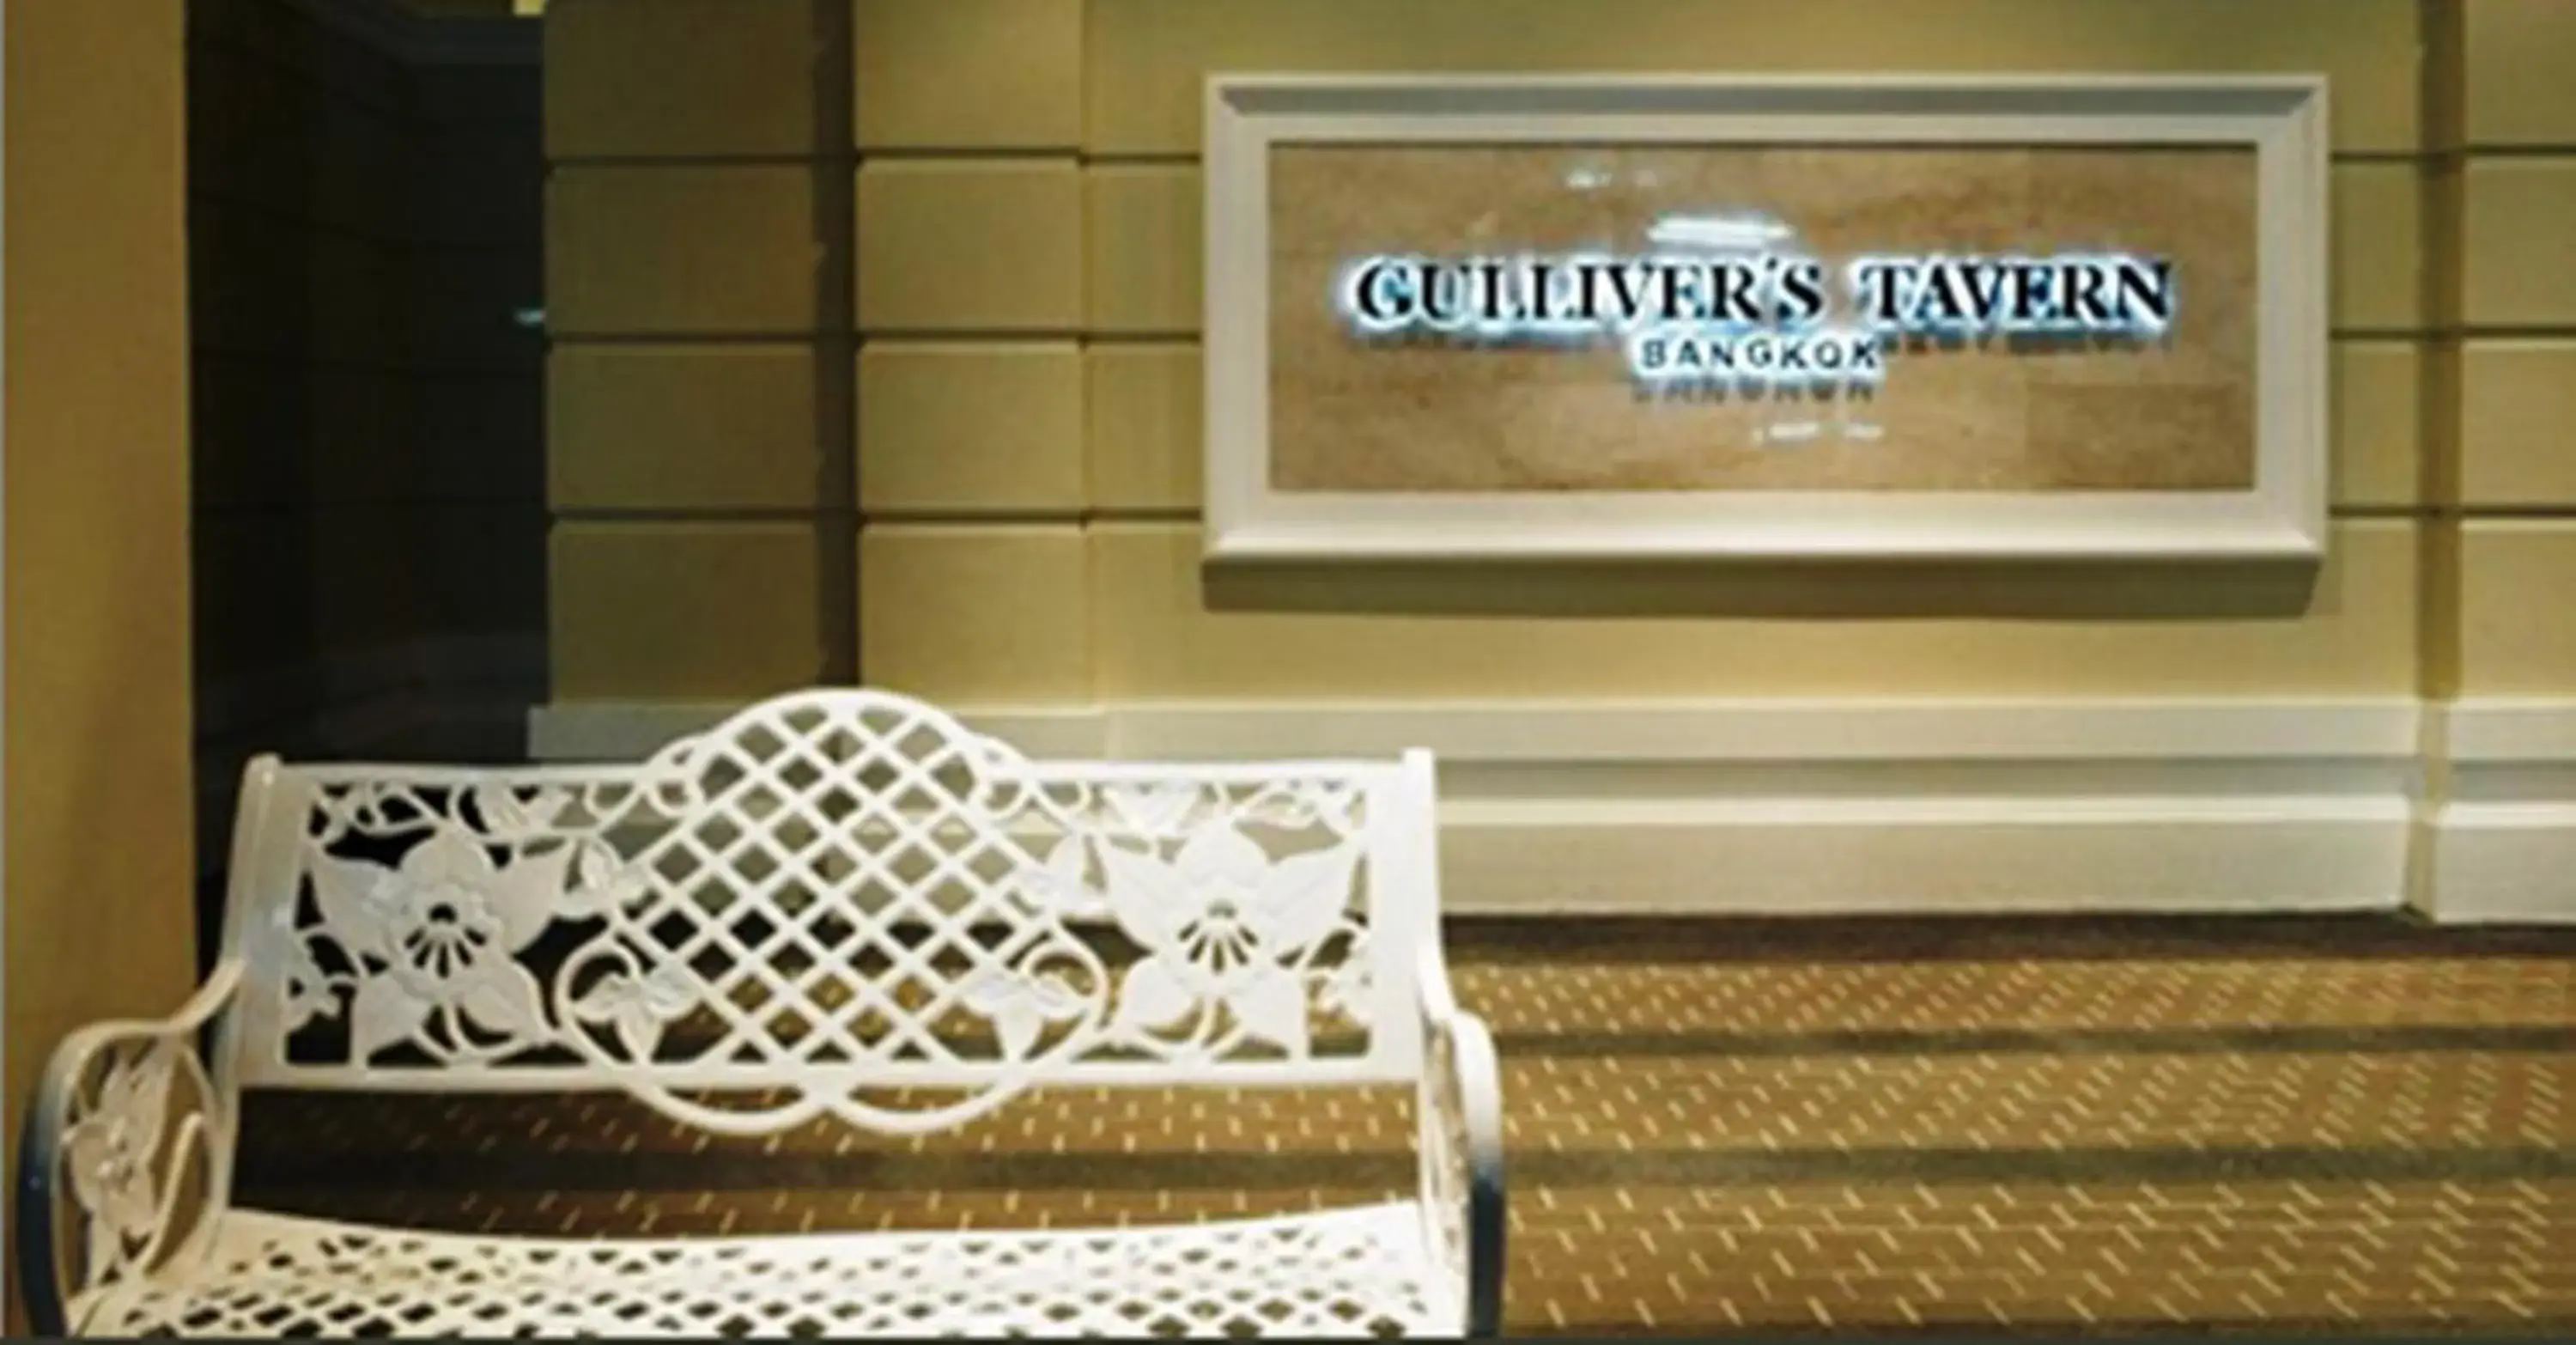 Decorative detail in Gulliver's Tavern Hotel